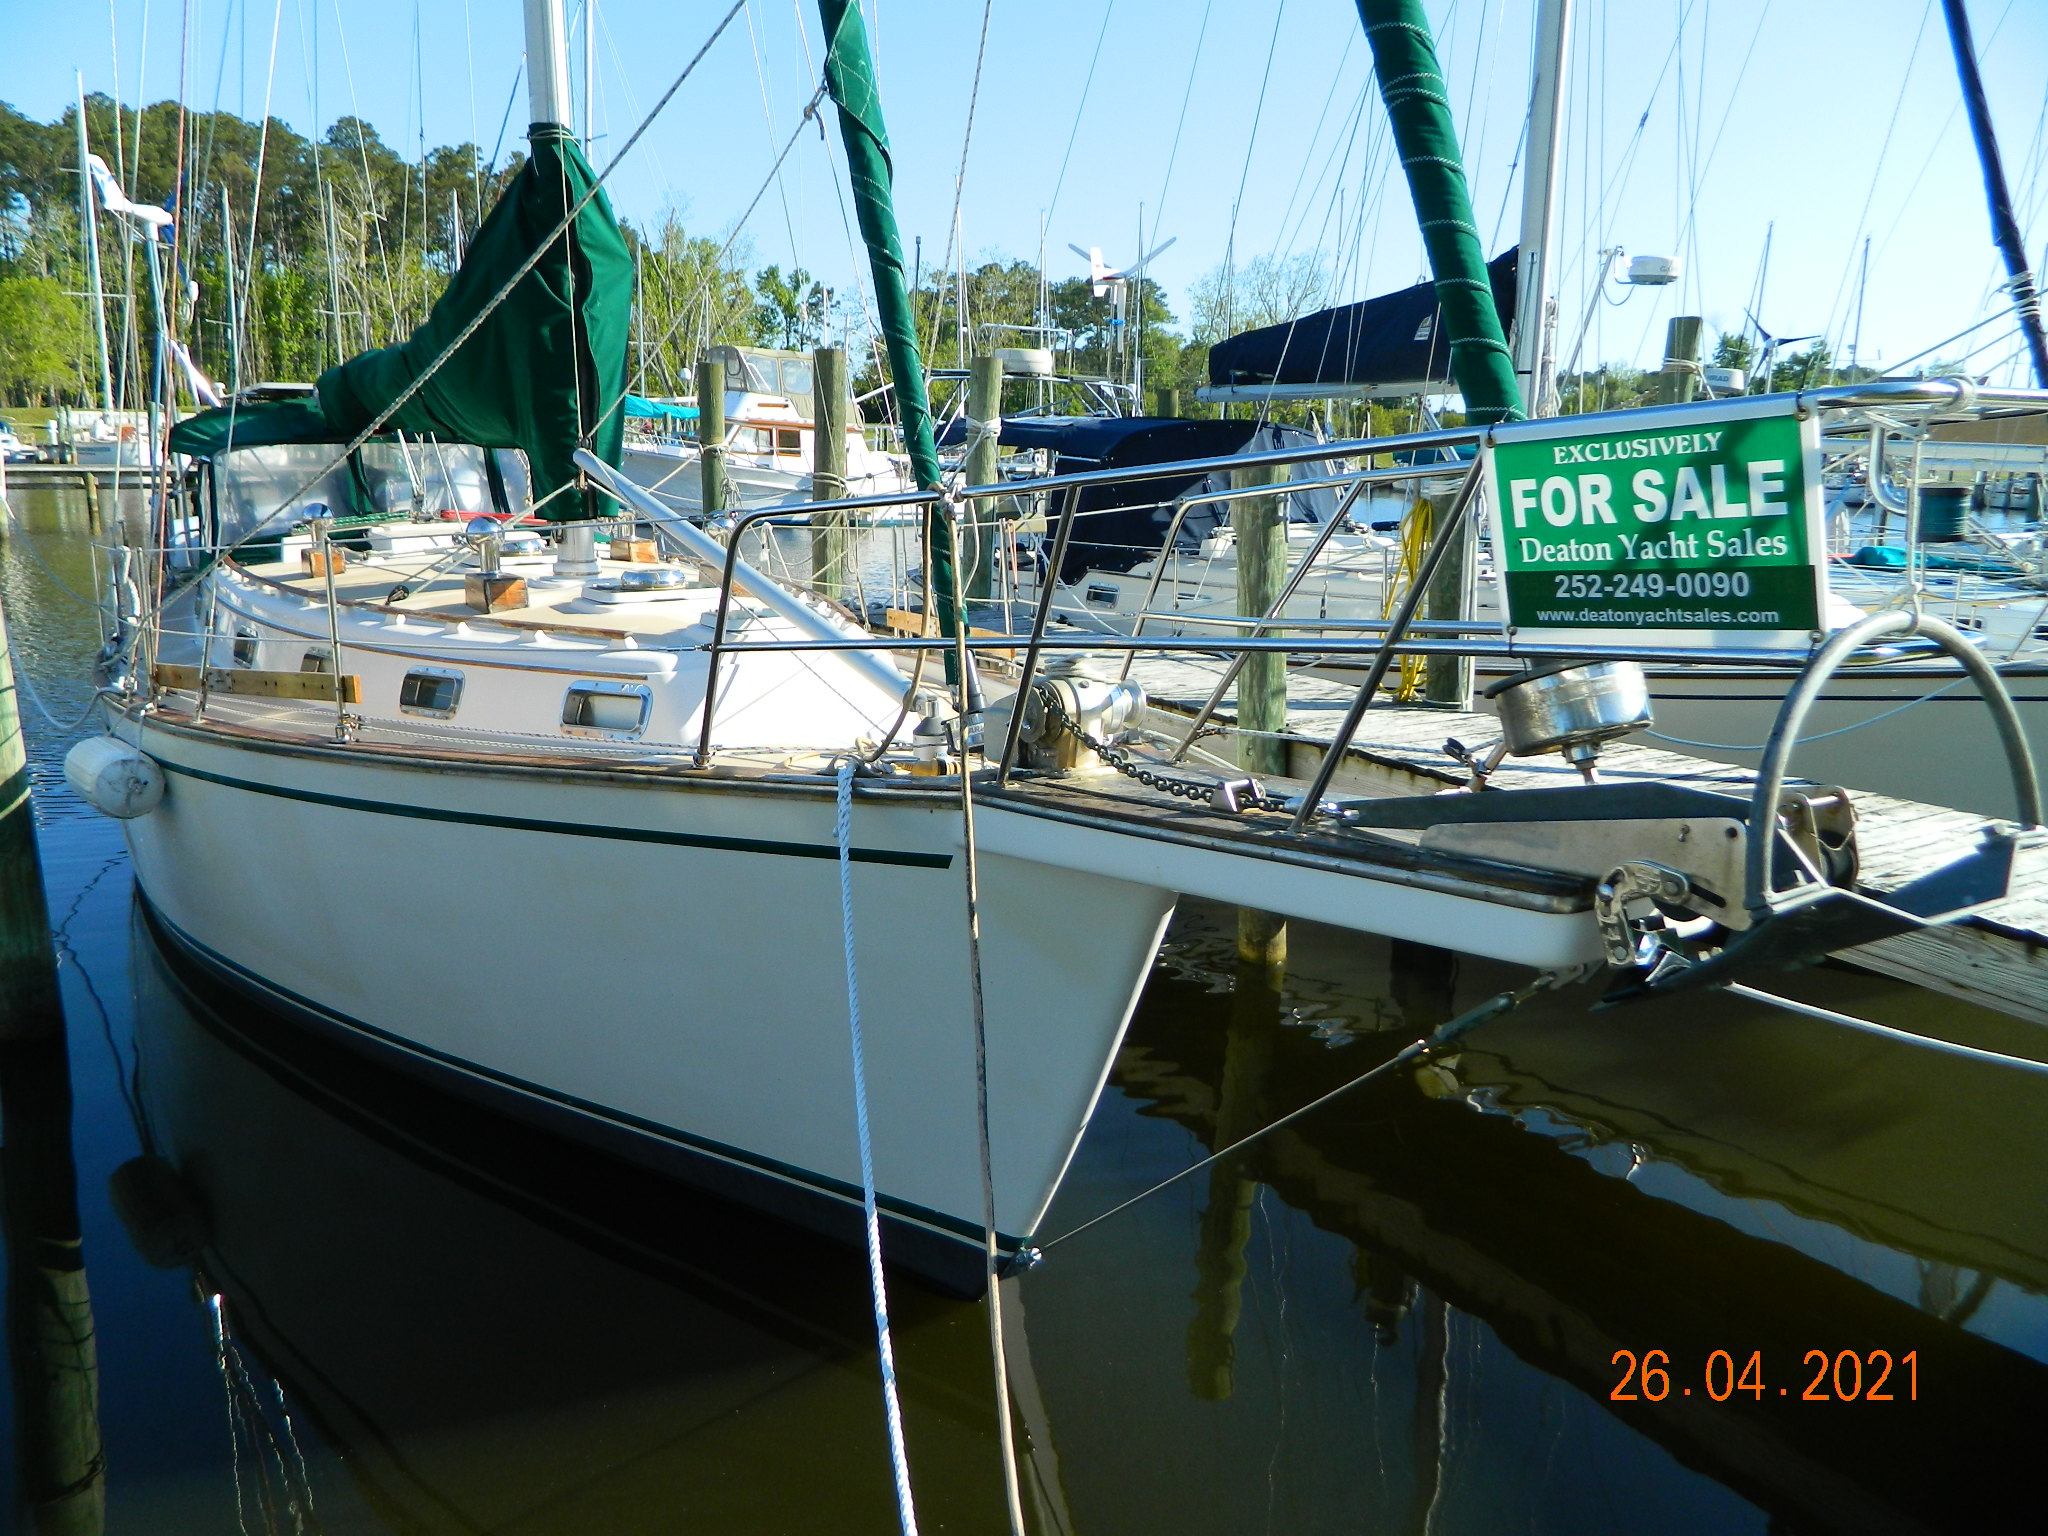 deaton yacht sales